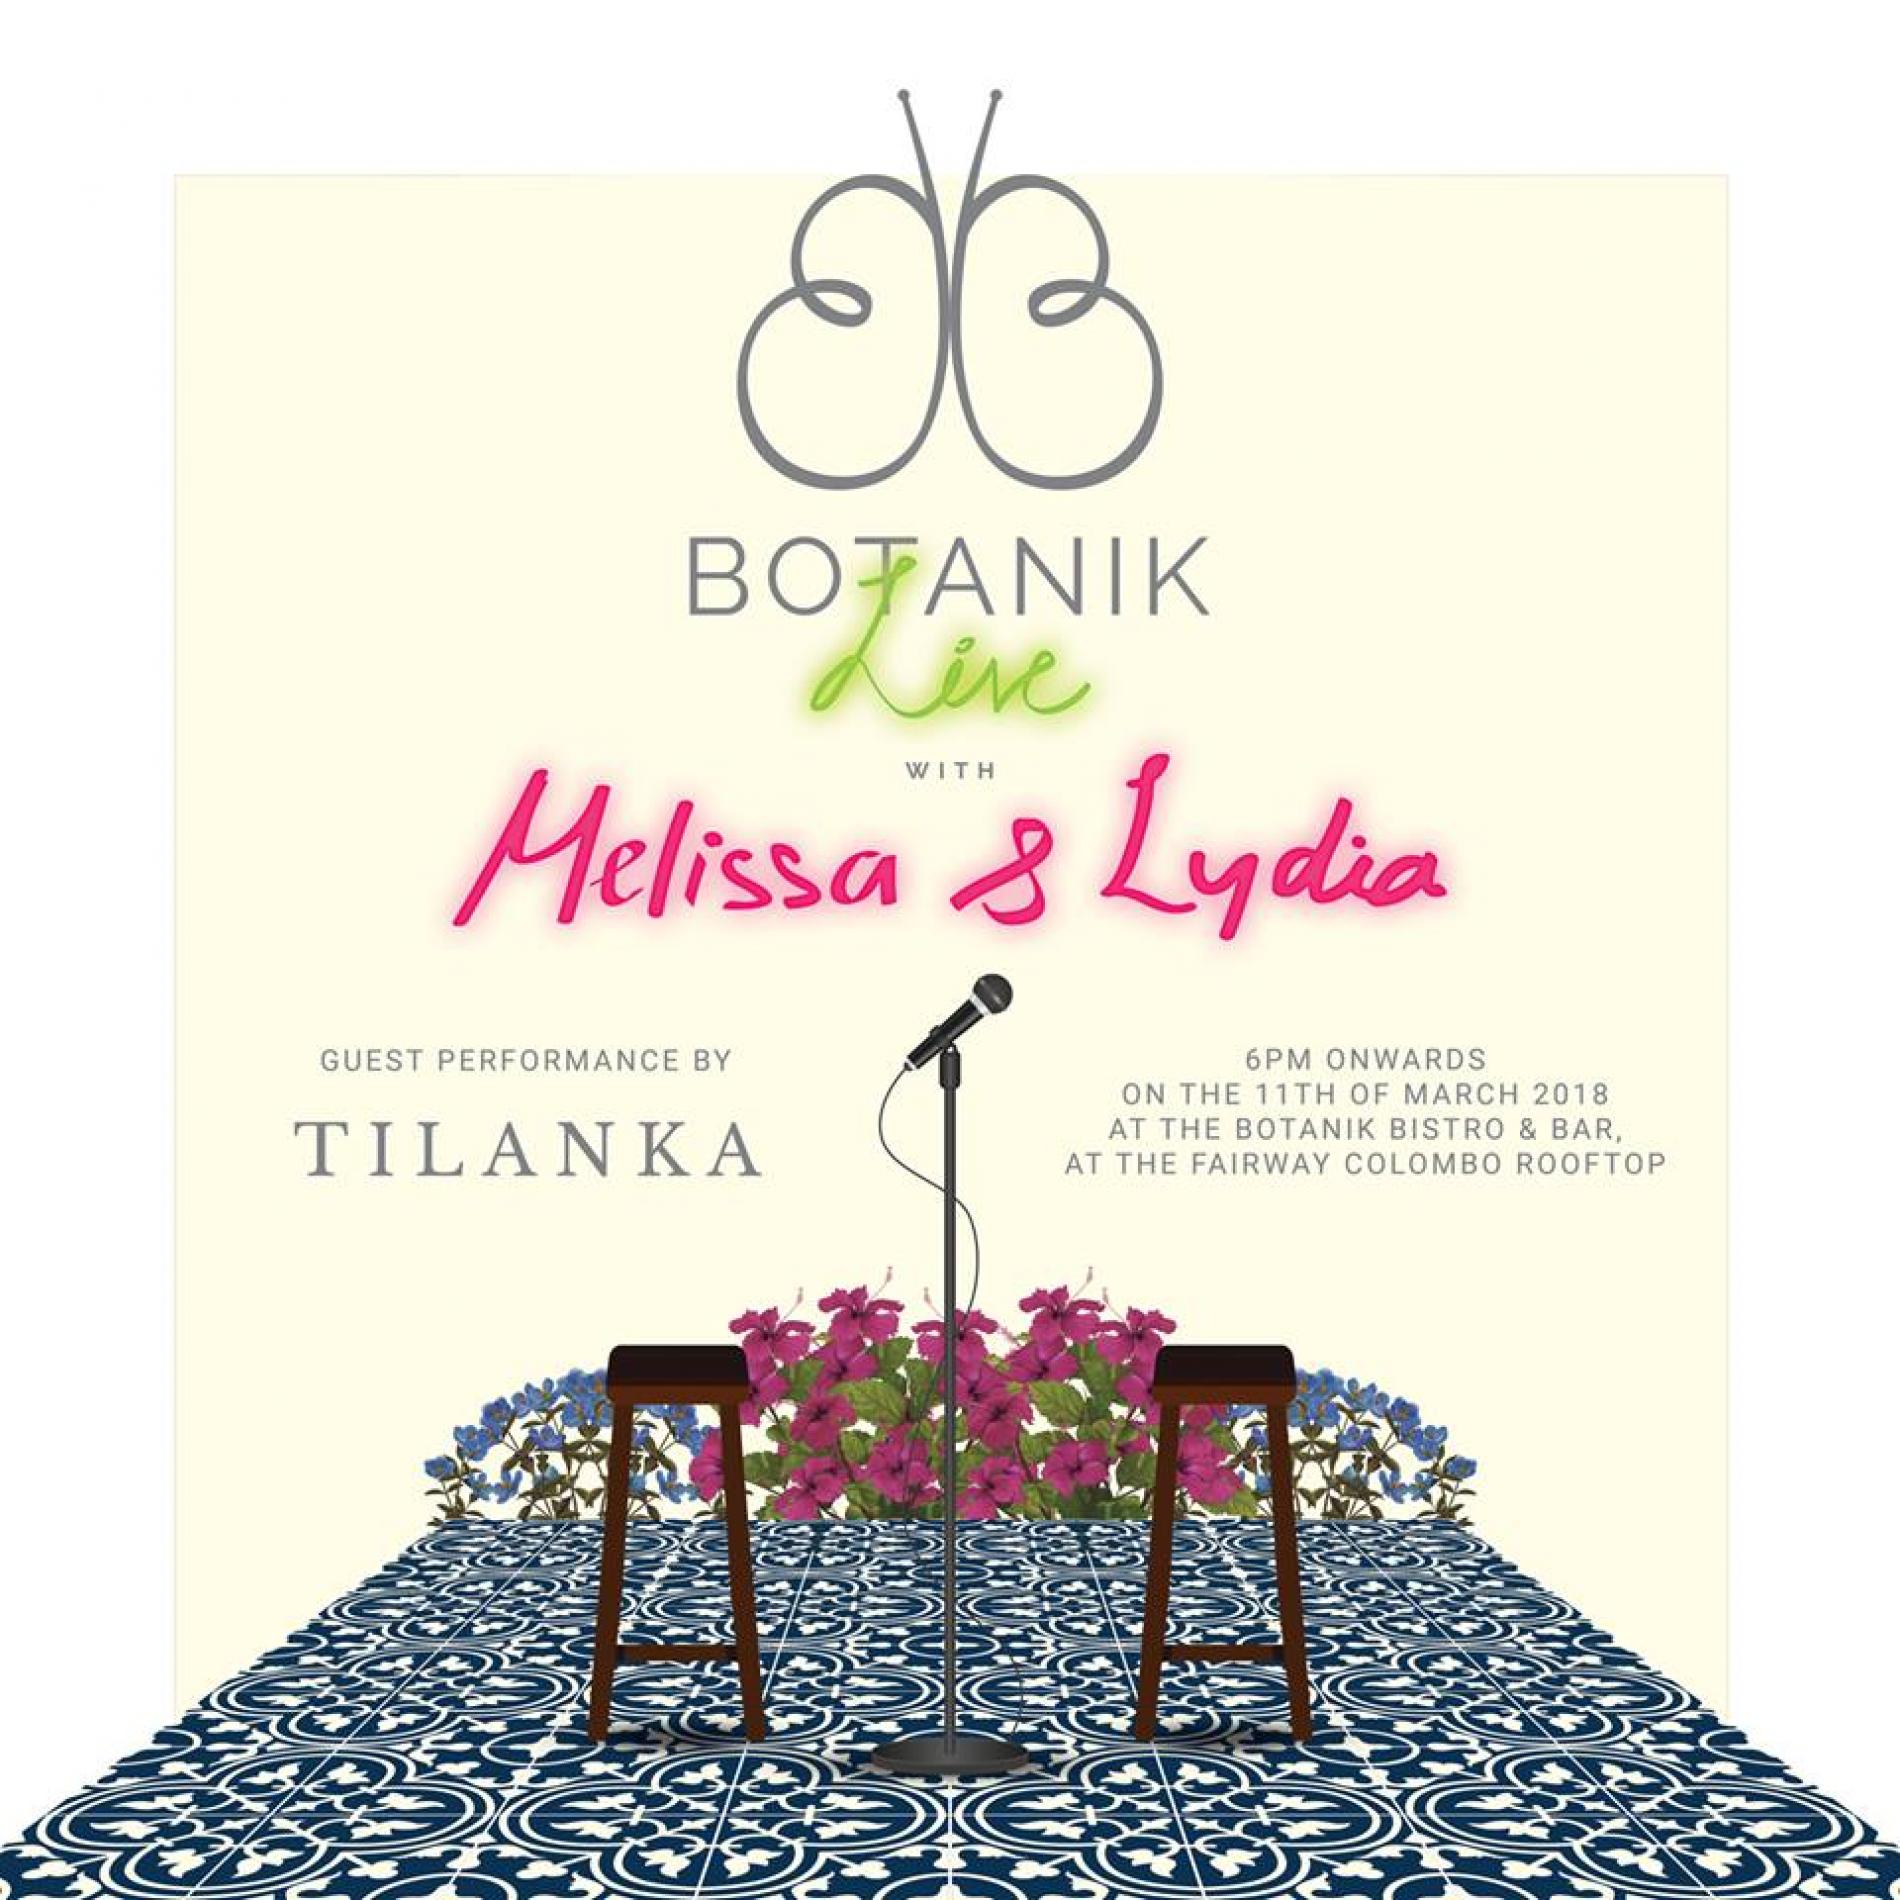 Botanik Live – Melissa & Lydia